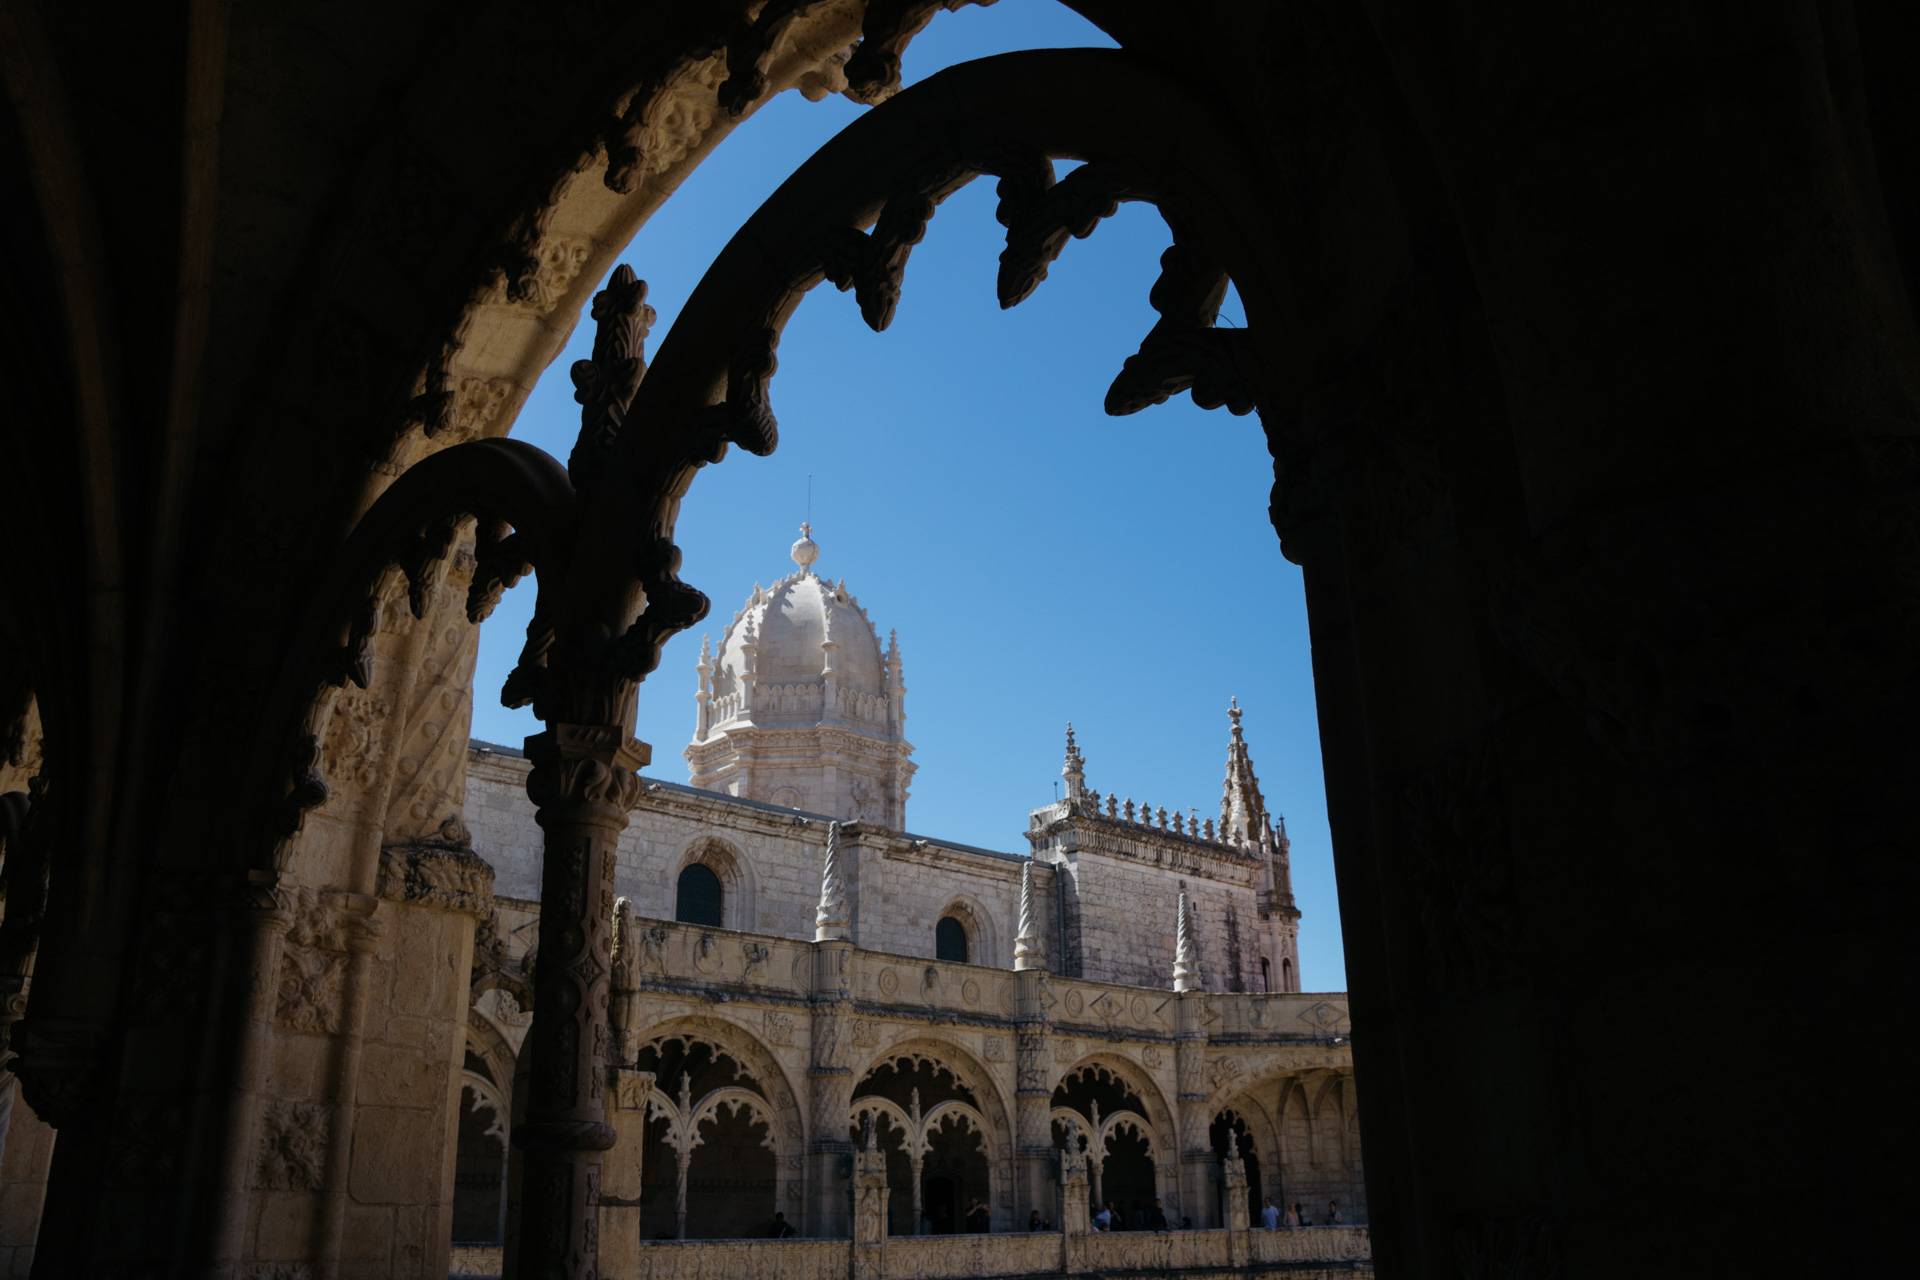 The majesty of the Mosteiro do Jerónimos